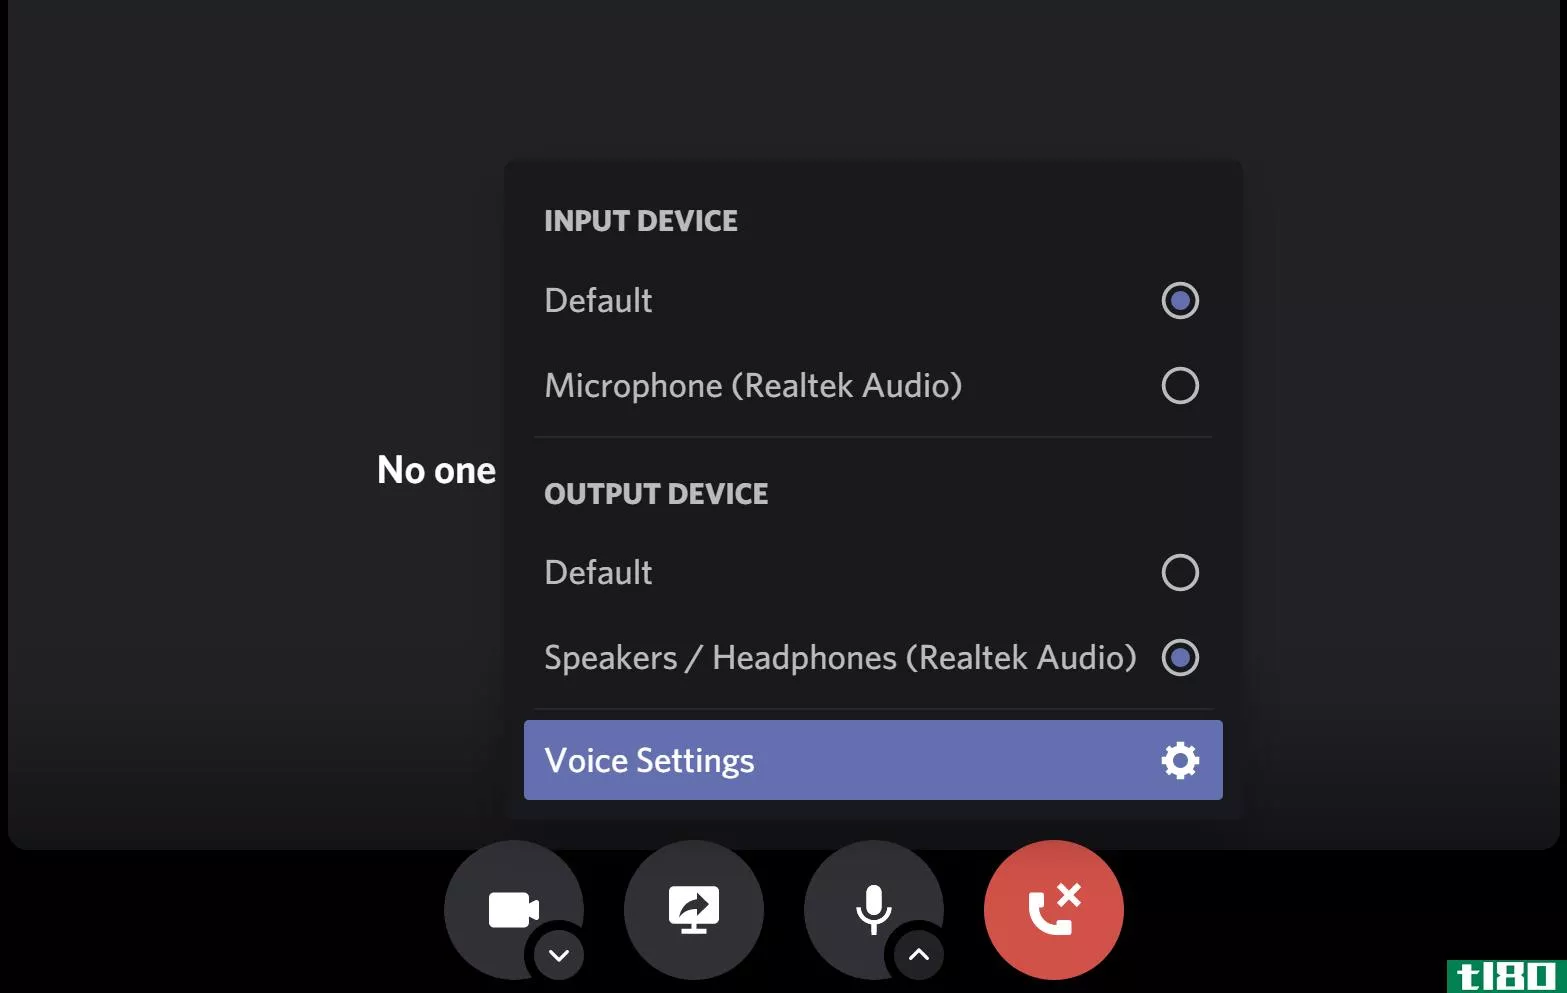 Voice Settings Button